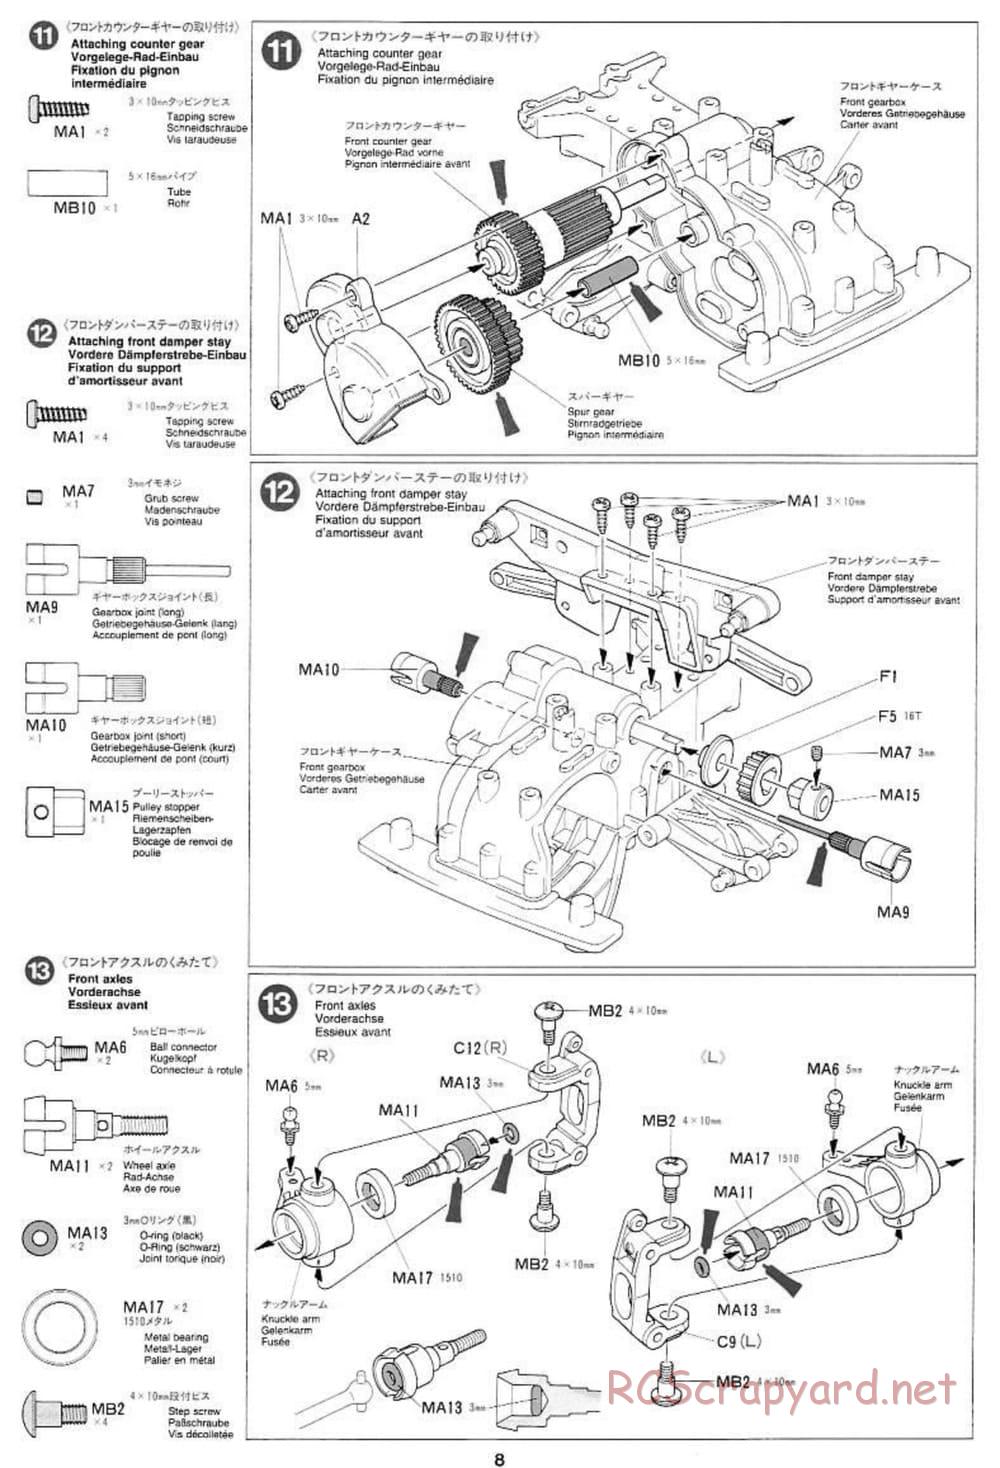 Tamiya - Toyota Corolla WRC - TA-03FS Chassis - Manual - Page 8